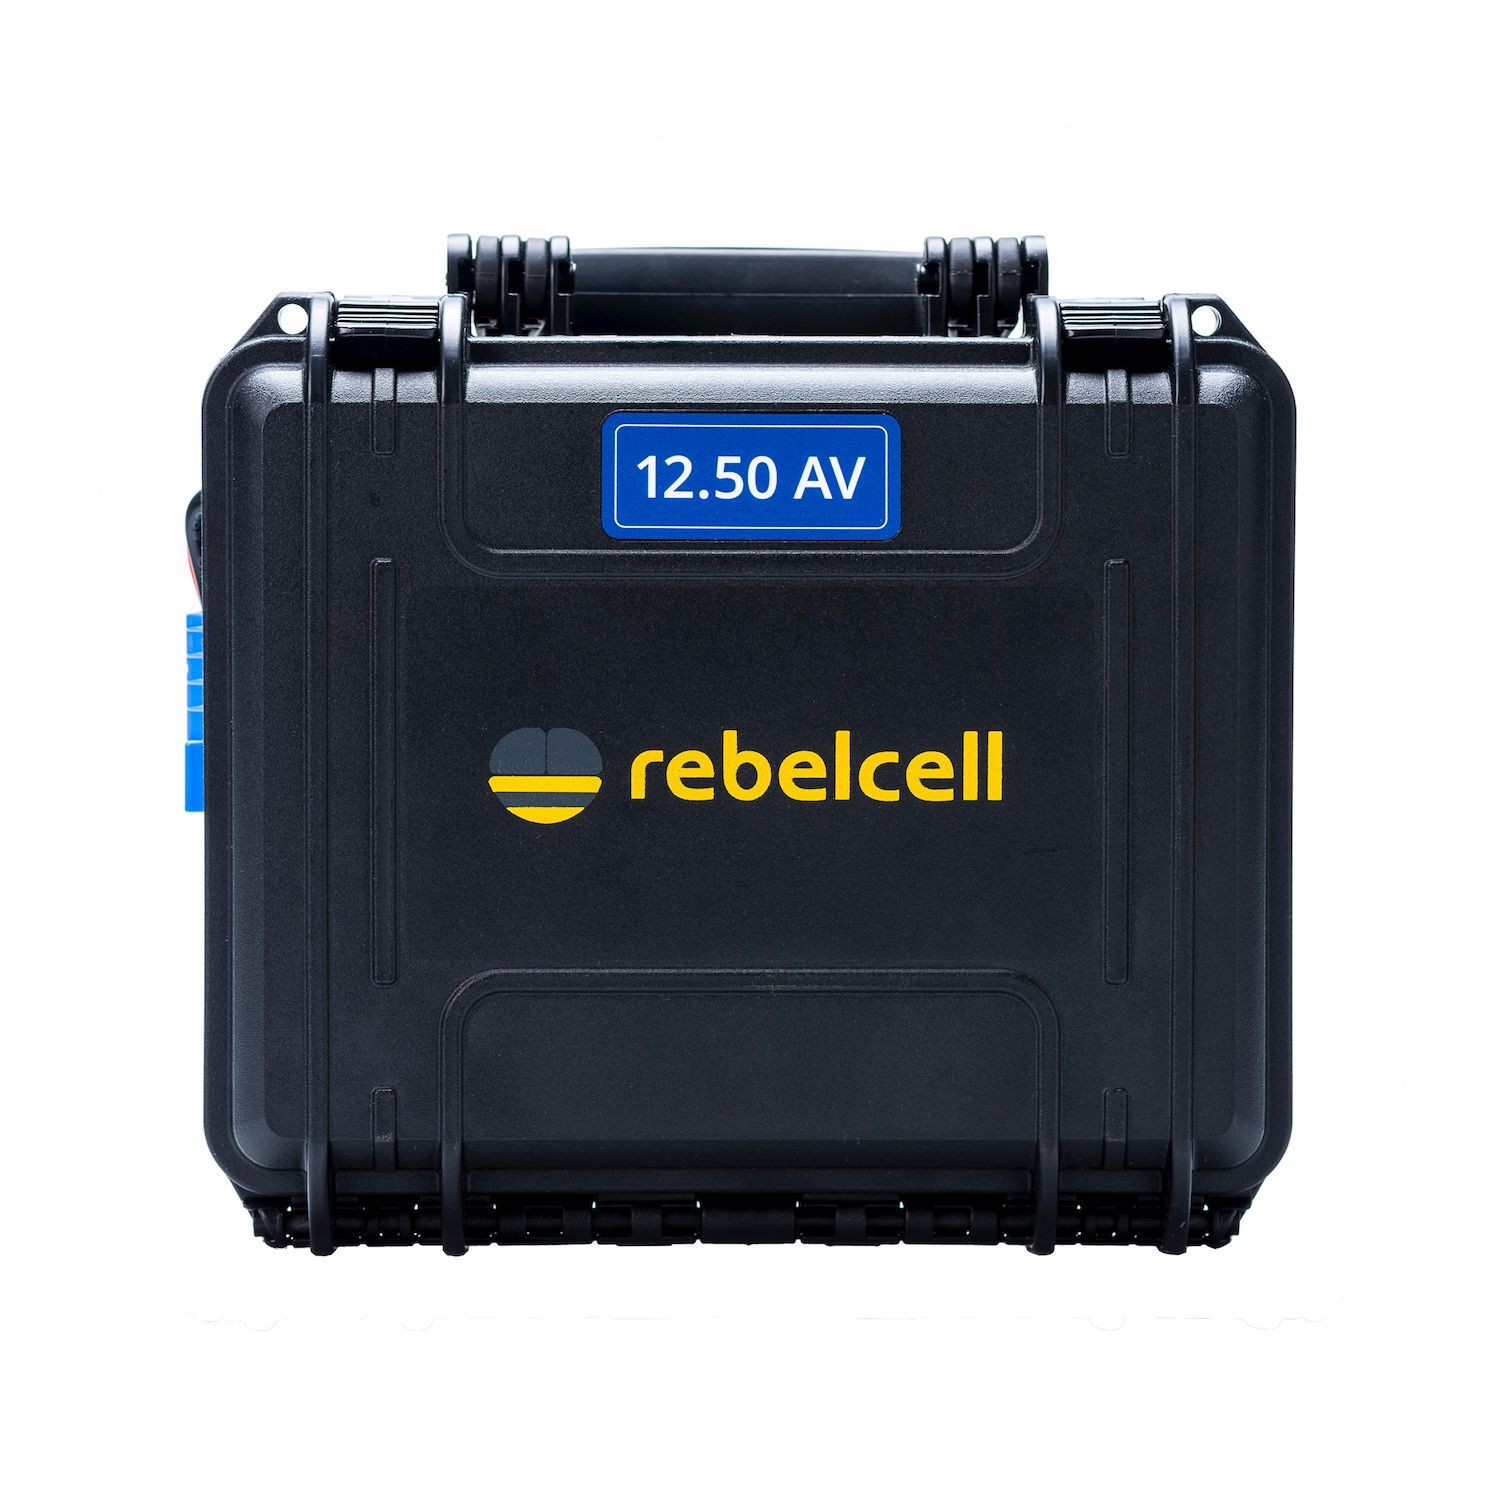 REBELCELL Rebellcell Akku 12V/50A kuljetuslaatikossa